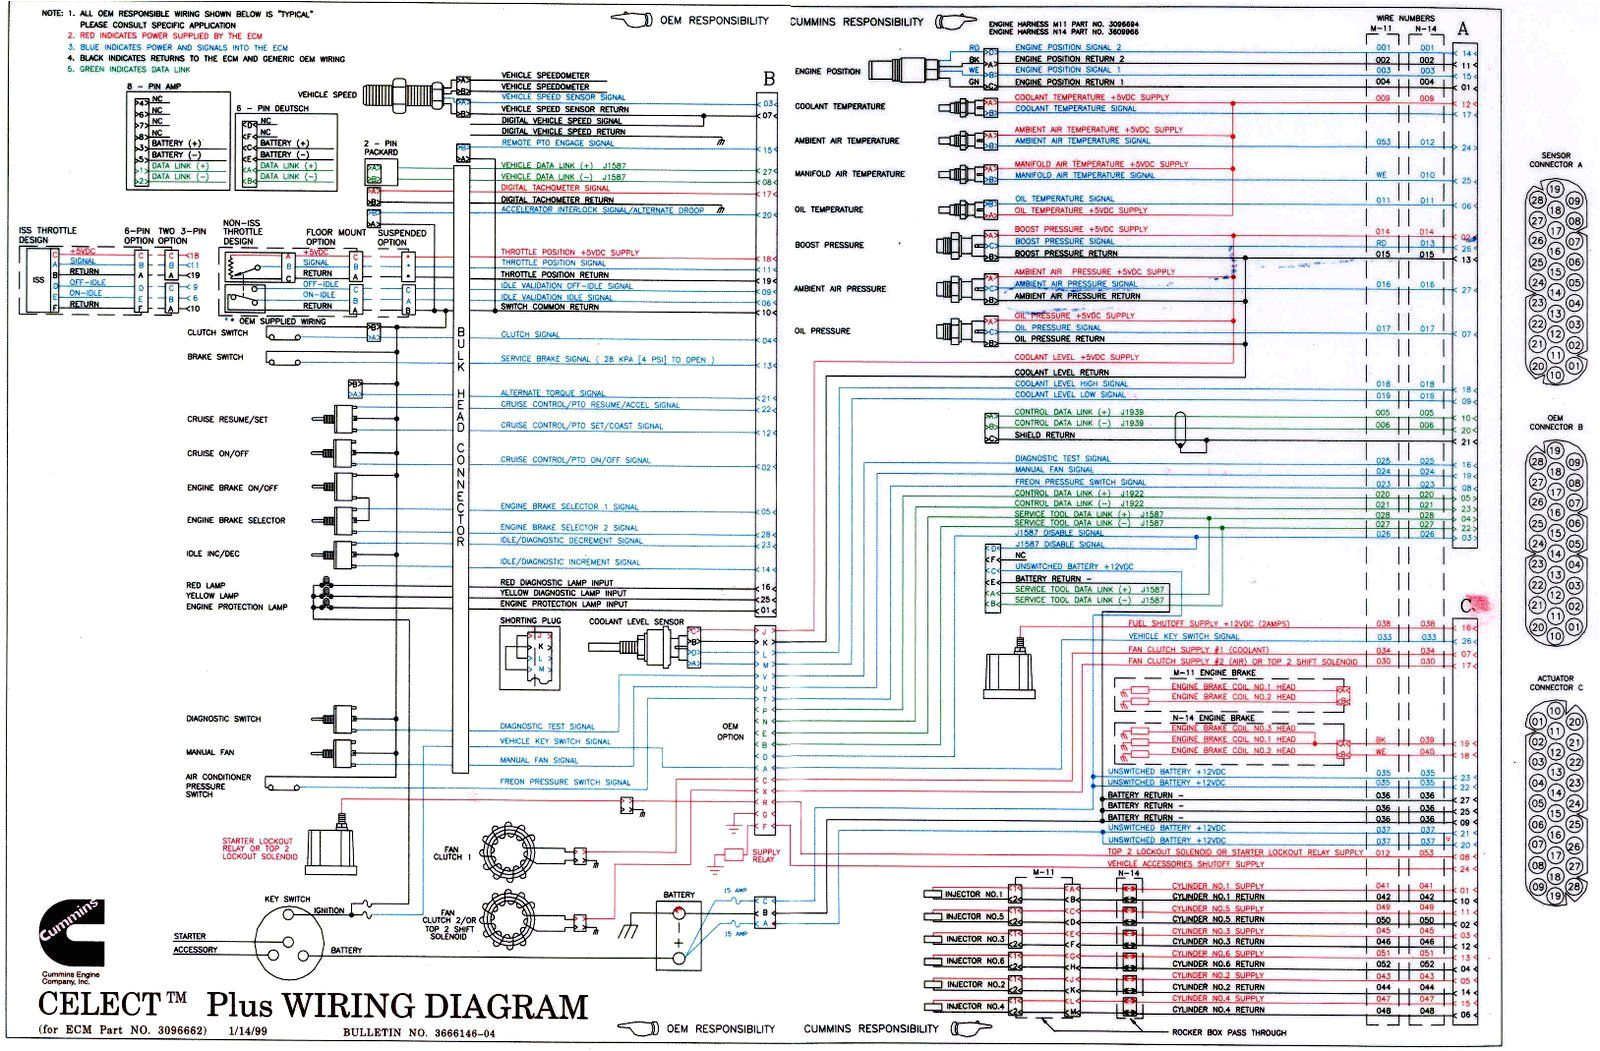 cummins wiring diagram